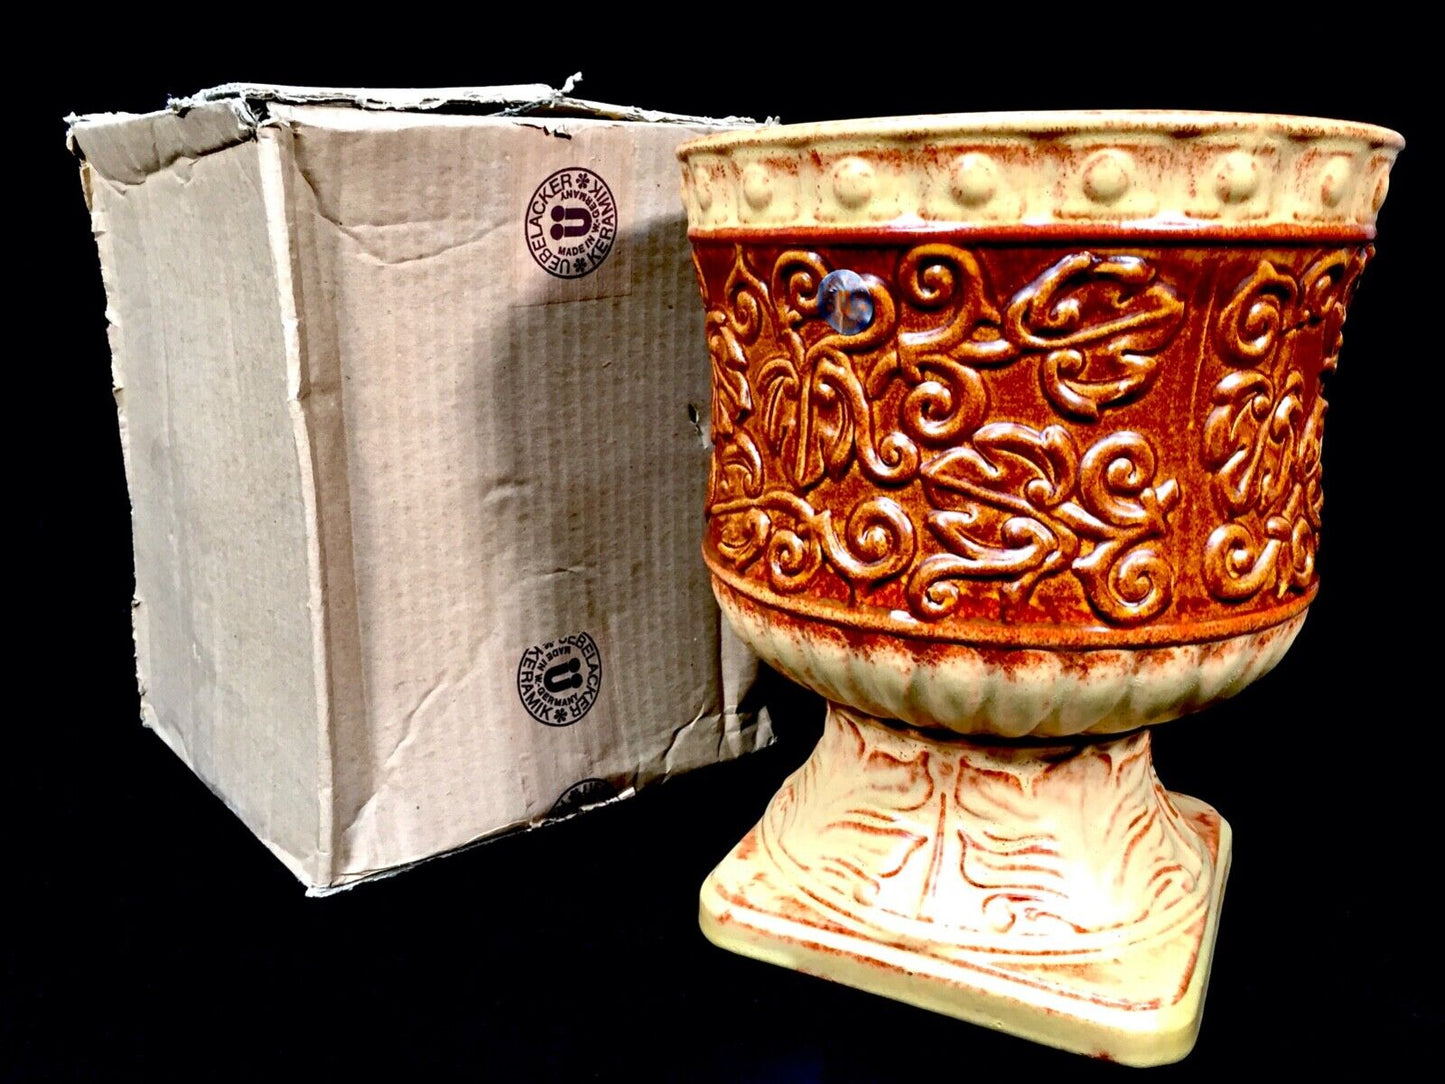 Vintage West German Pottery Planter / Urn / Vase in Original Box / Cream & Brown